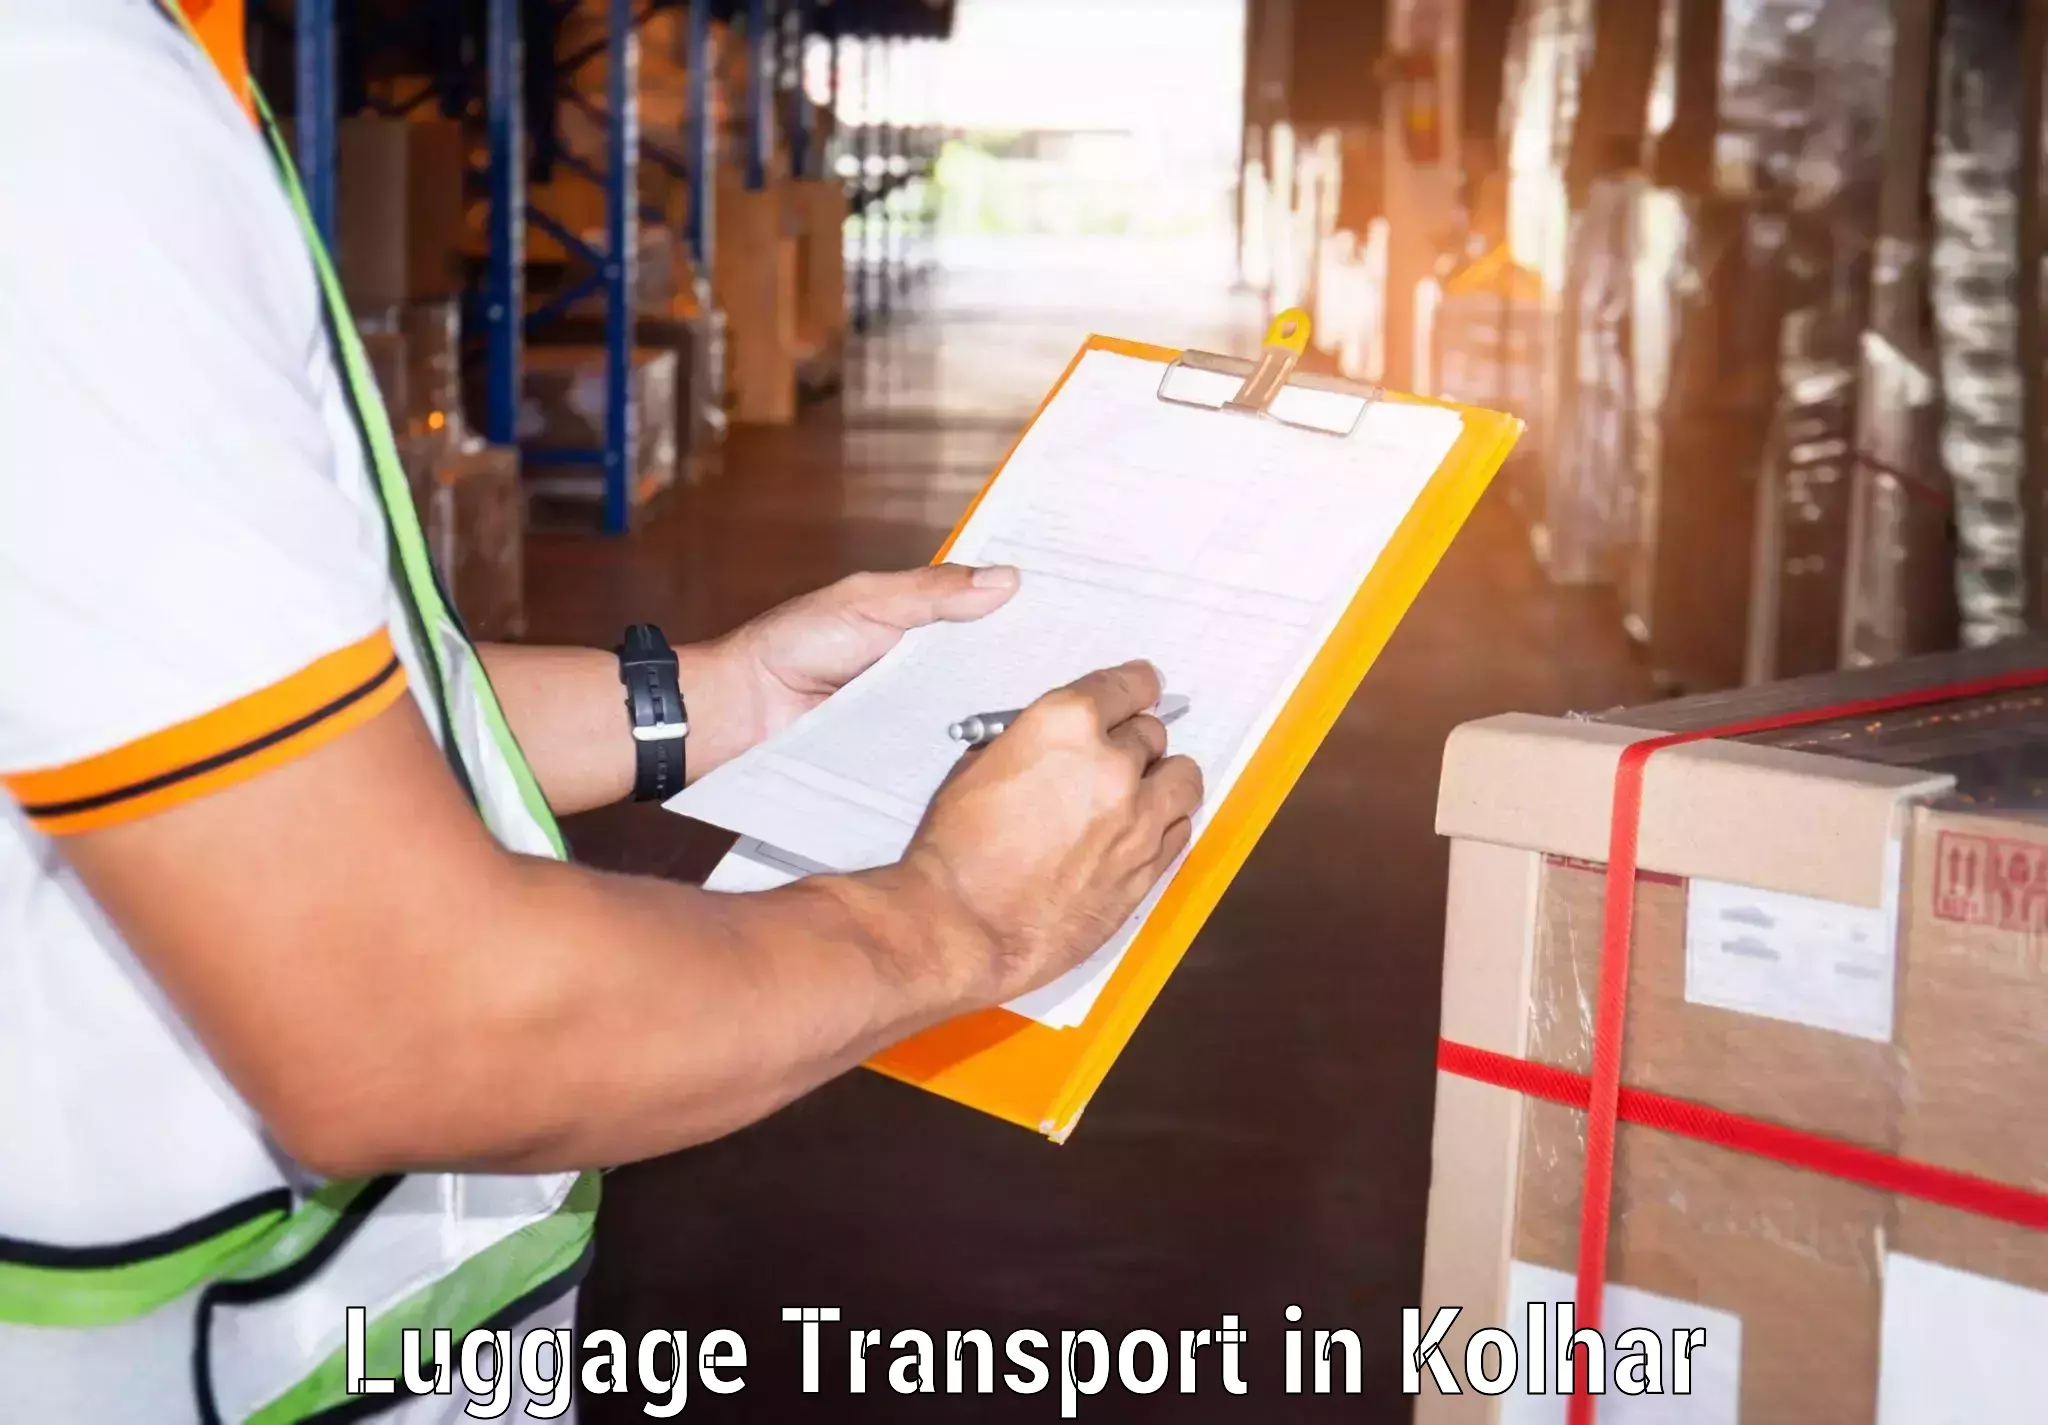 Luggage transport company in Kolhar